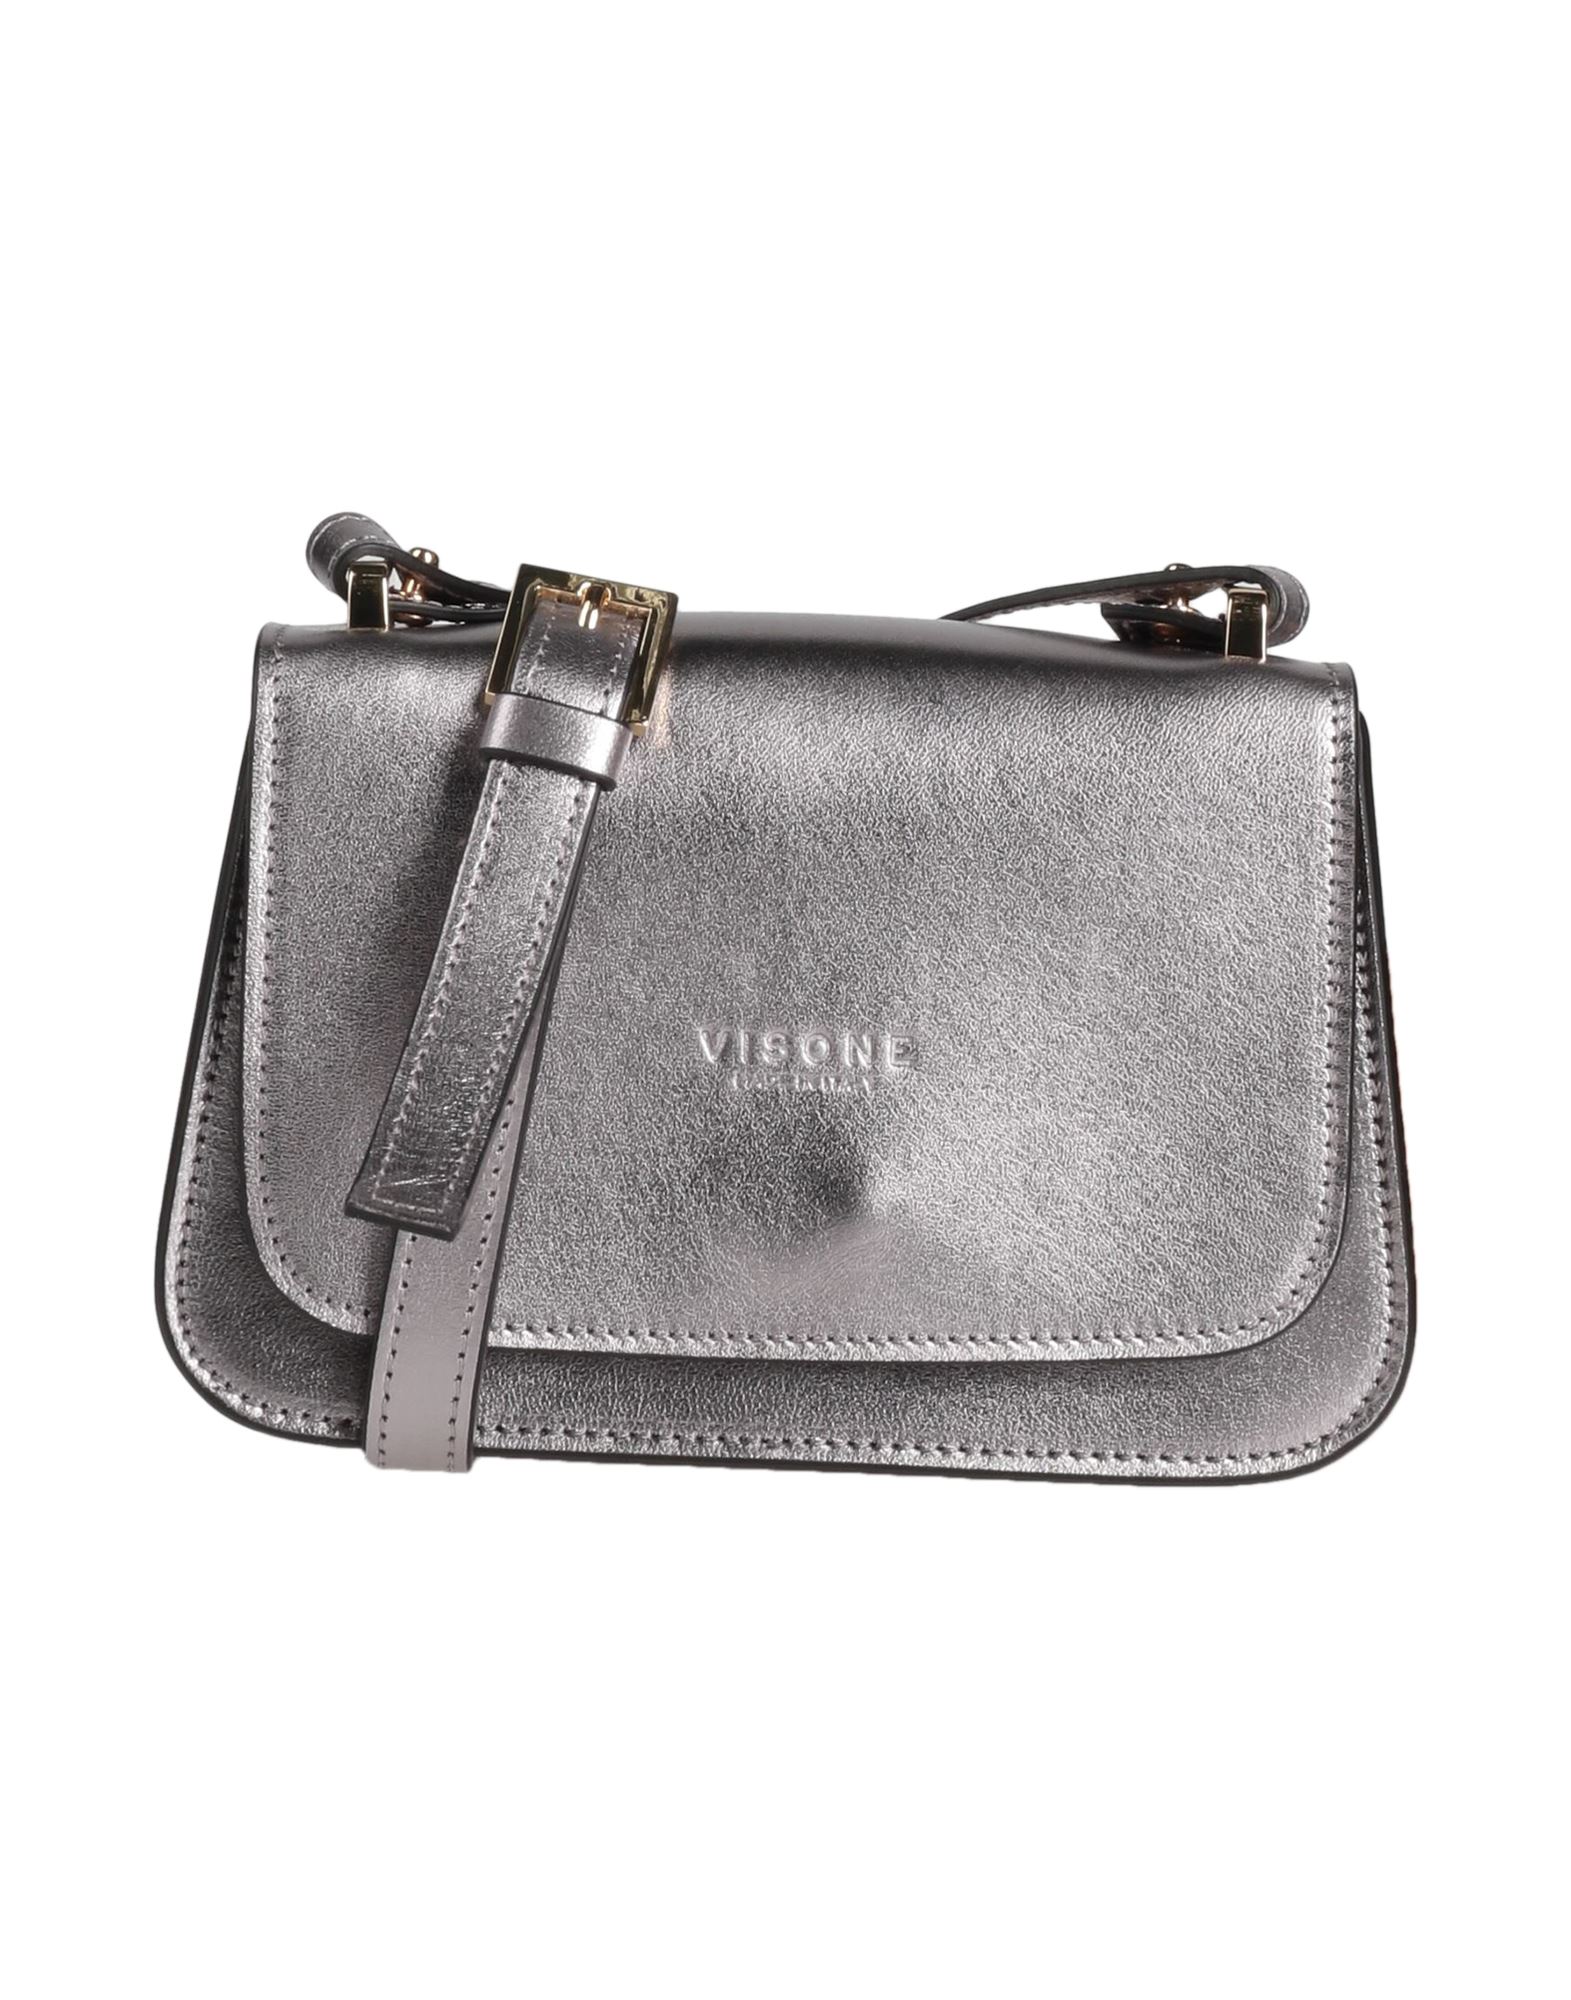 Visone Handbags In Silver